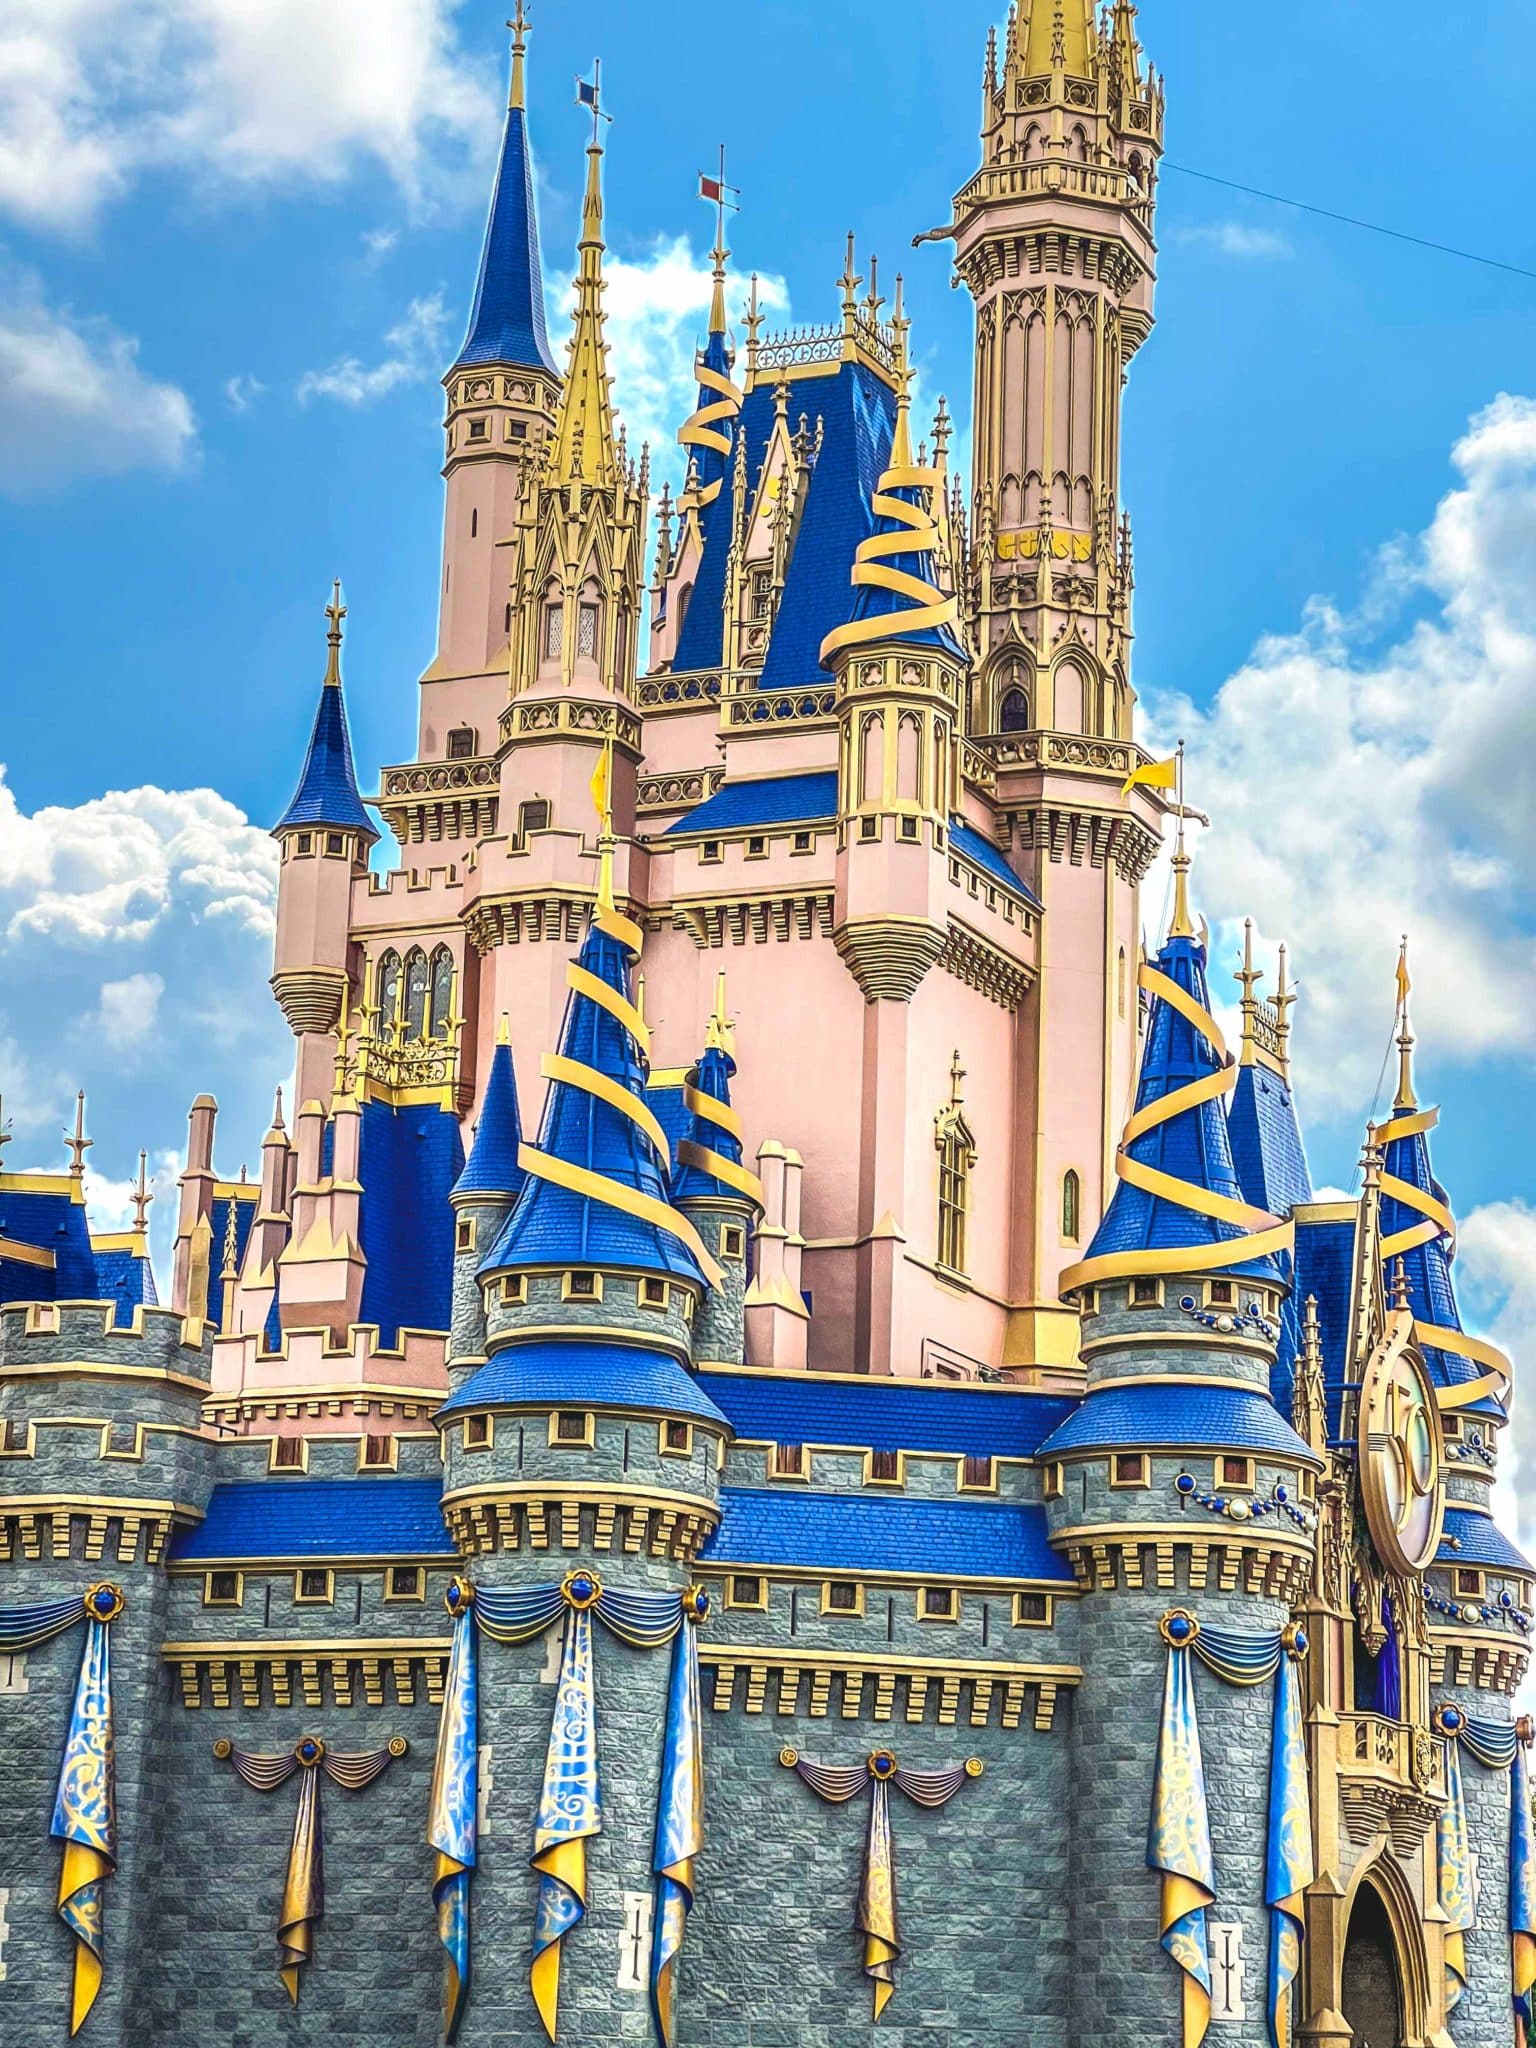 Cincerellas' Castle after the Walt Disney World 50th Anniversary makeover